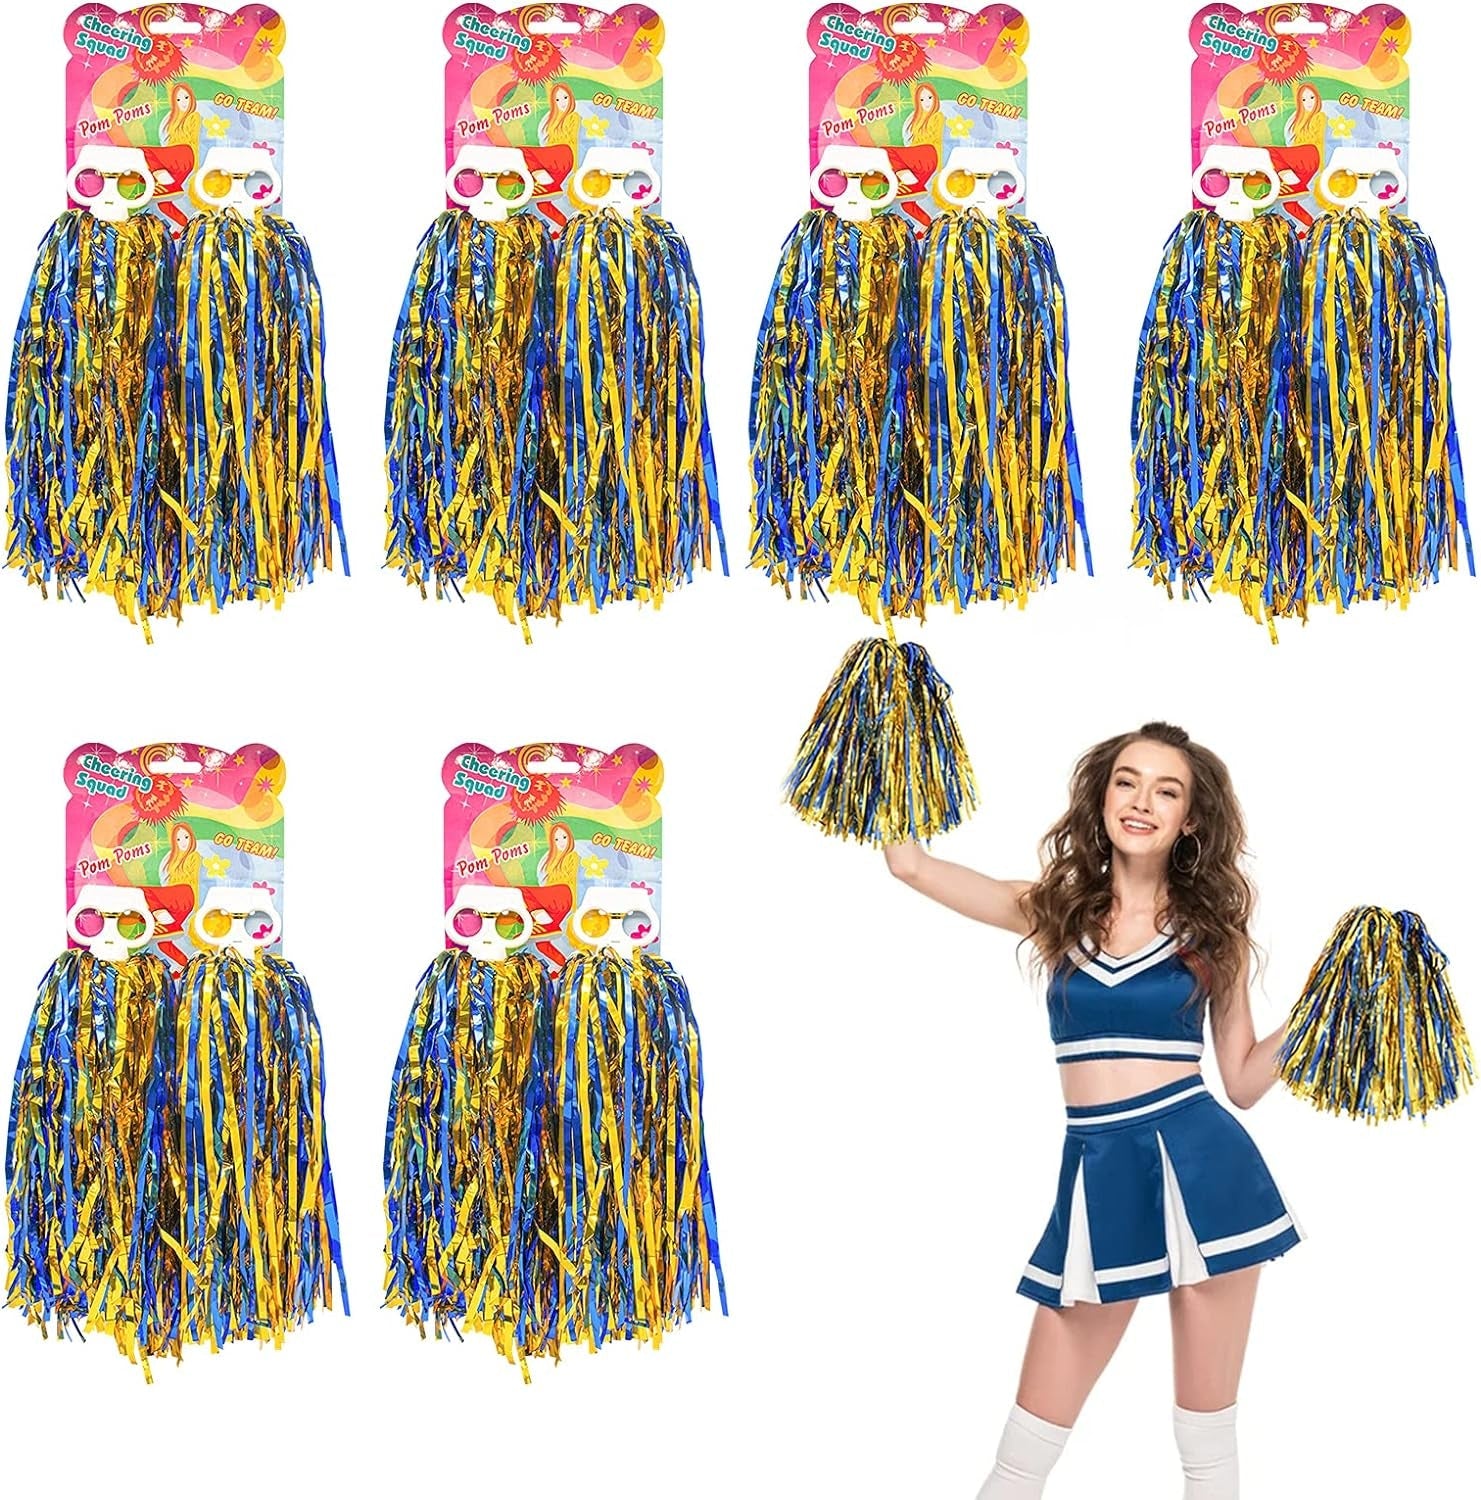 2 Pack Metallic Cheerleading Pom Pom Cheerleader Cheering Squad